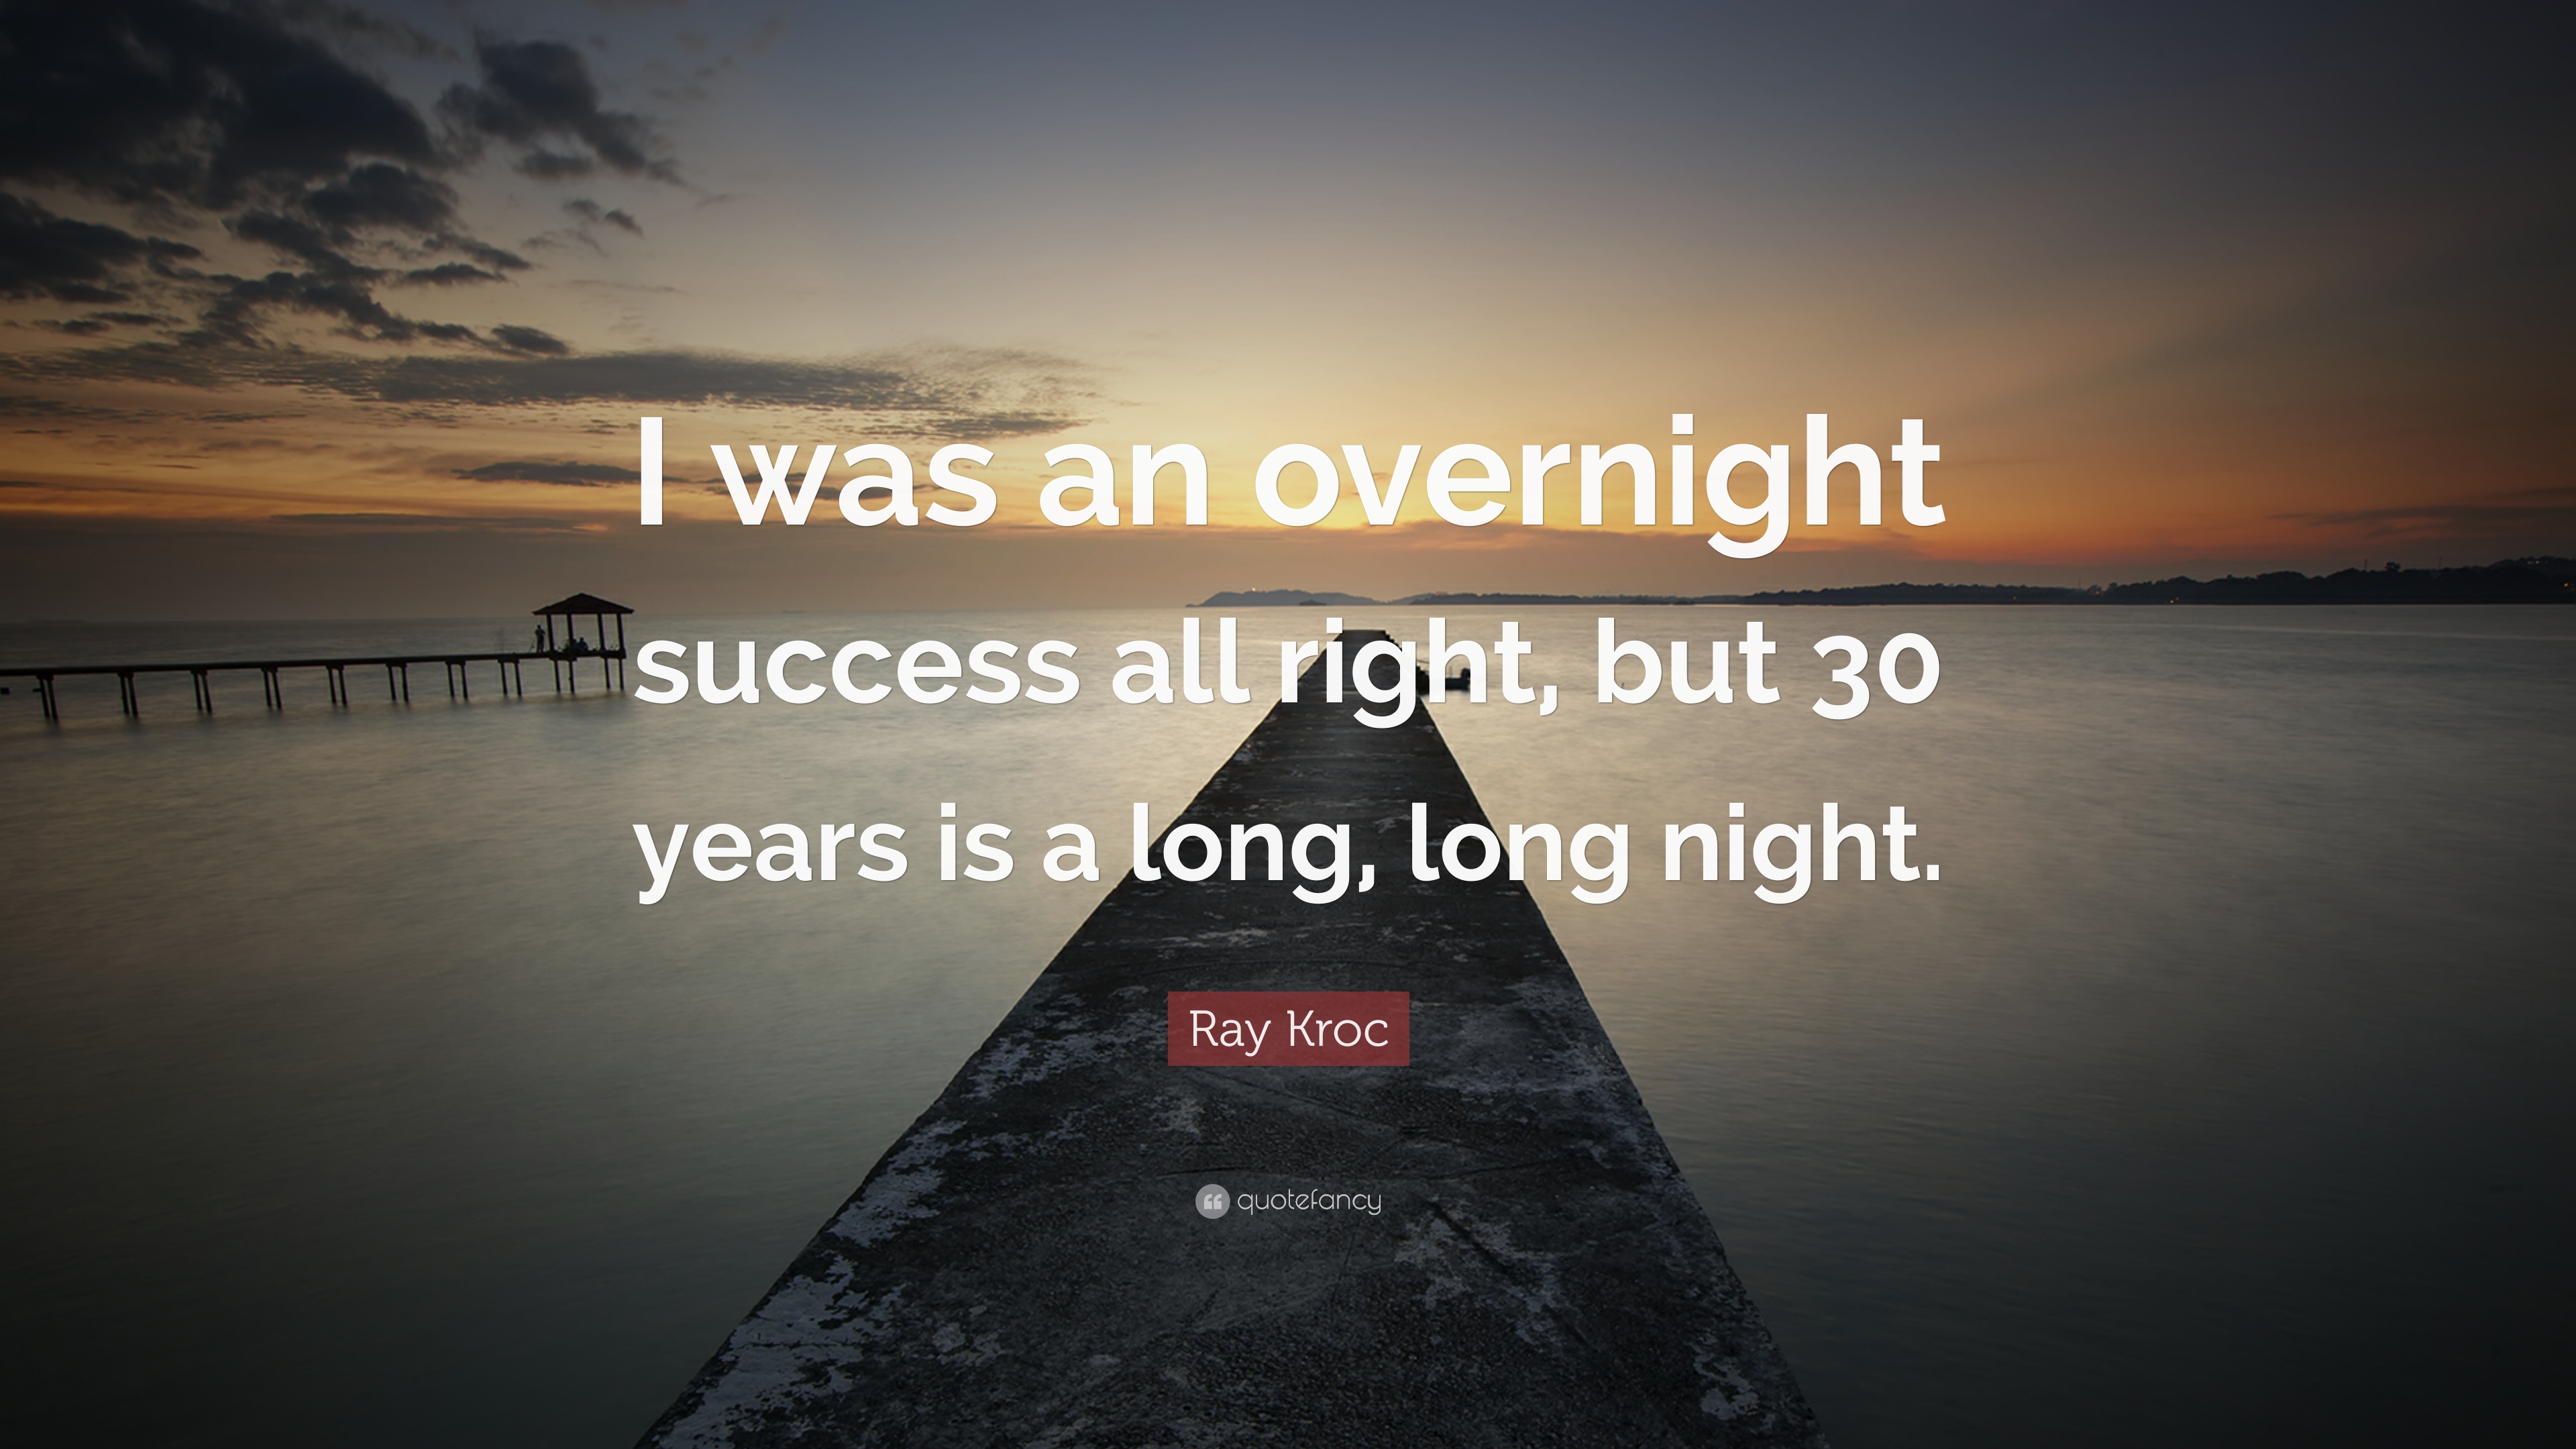 Overnight success